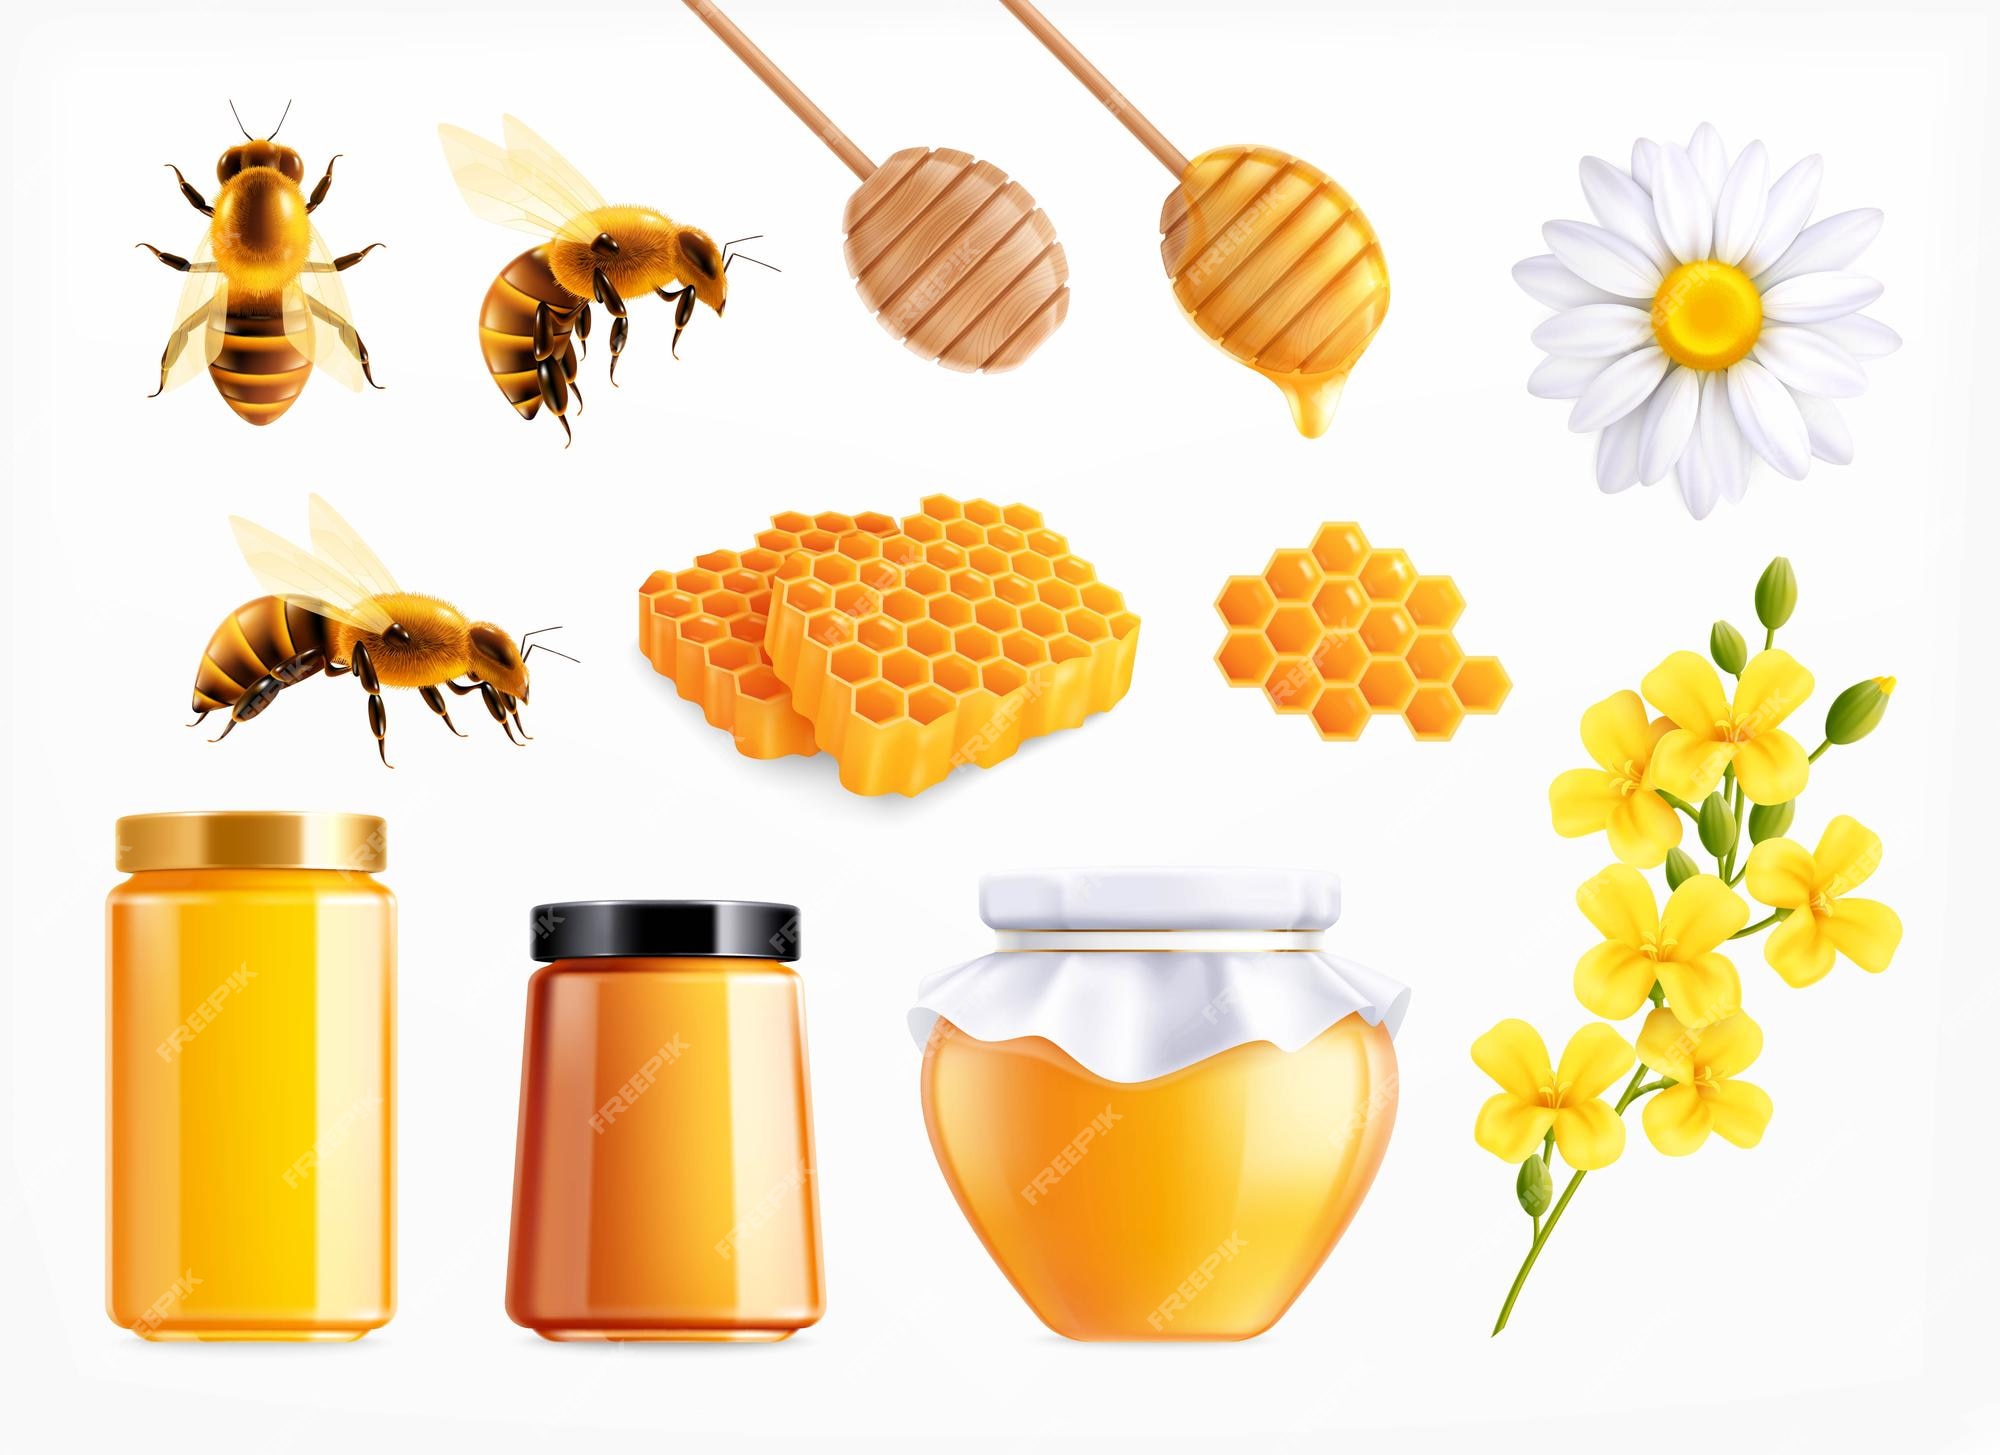 Honey Bee Images - Free Download on Freepik